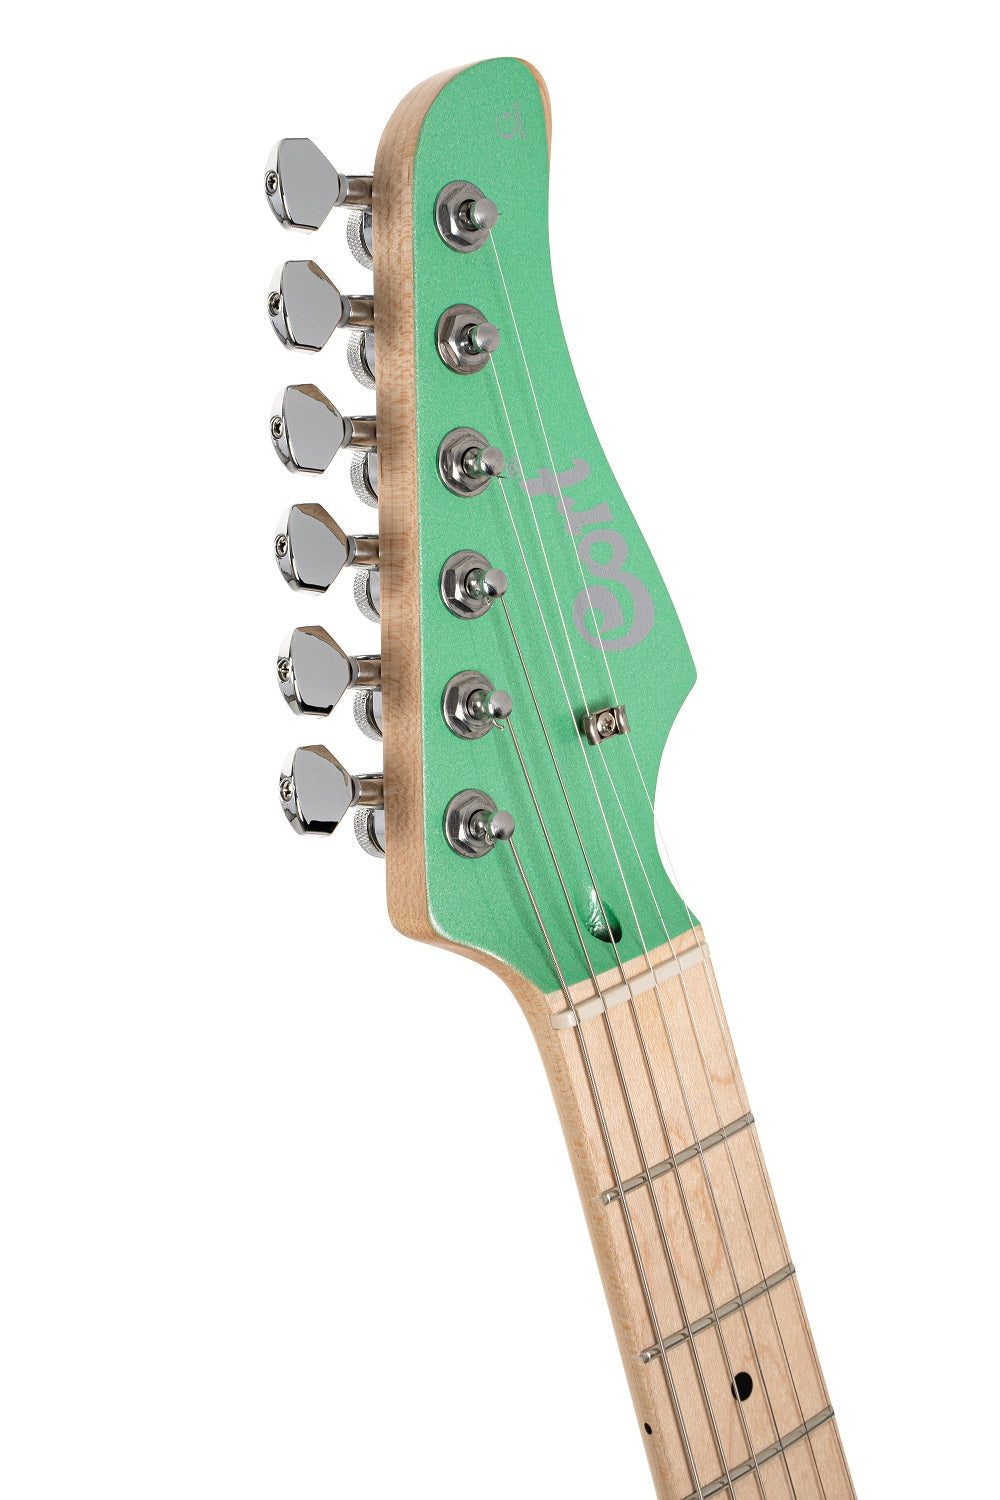 Cort G250 Spectrum Metallic Green, Electric Guitar for sale at Richards Guitars.